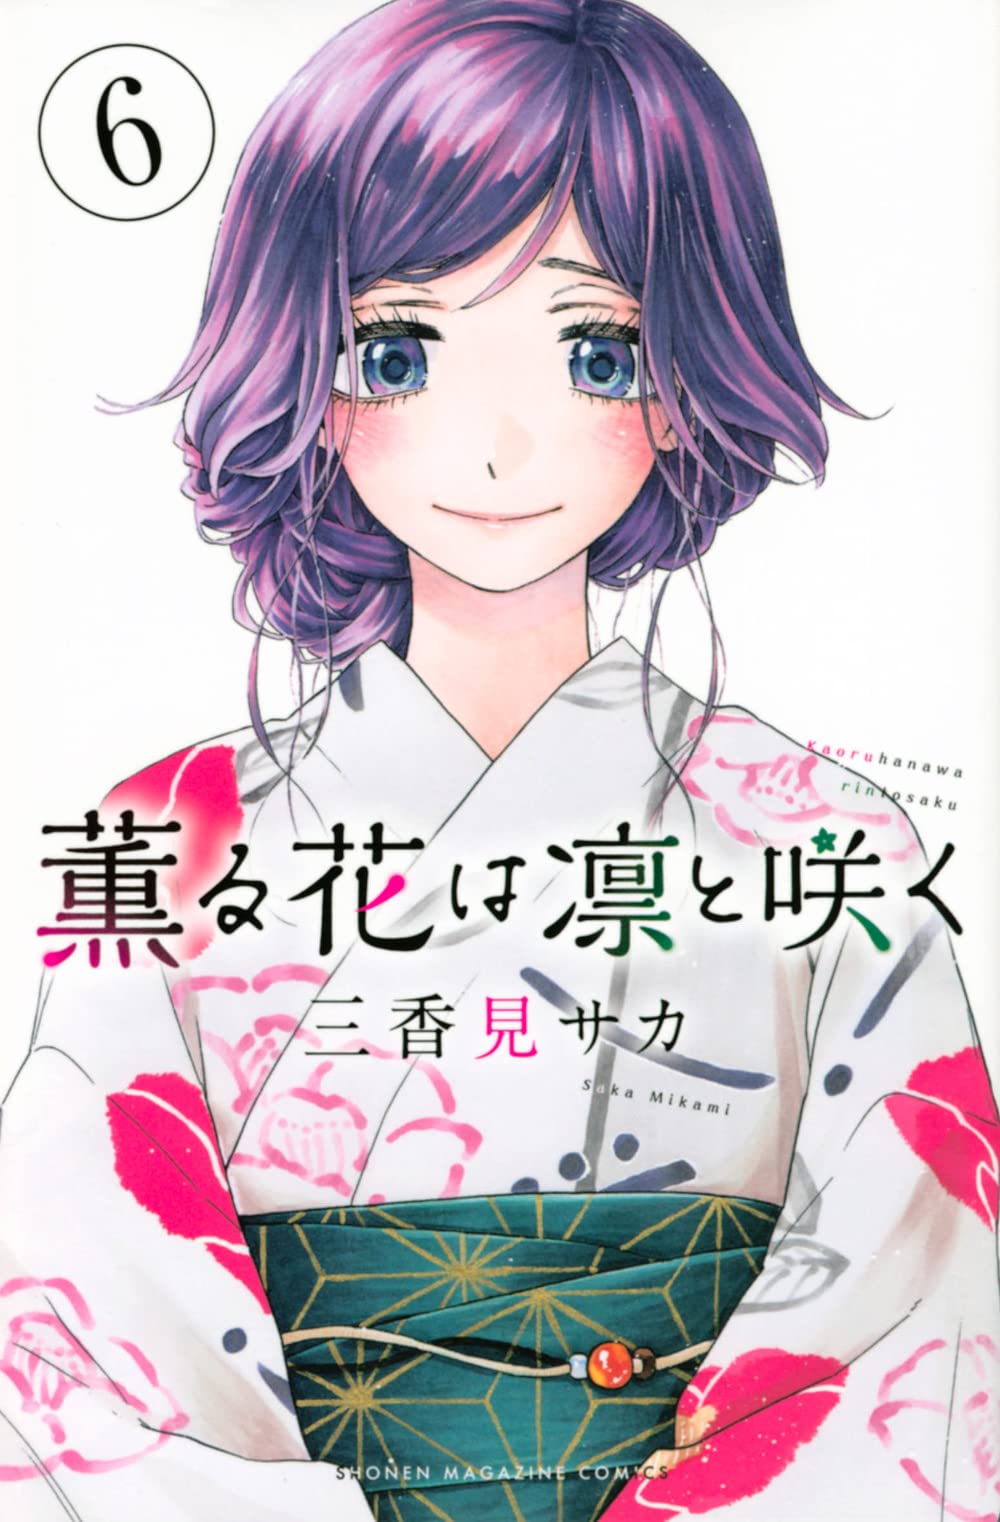 Romance manga recommendation for kaoru hana wa rin to saku. a